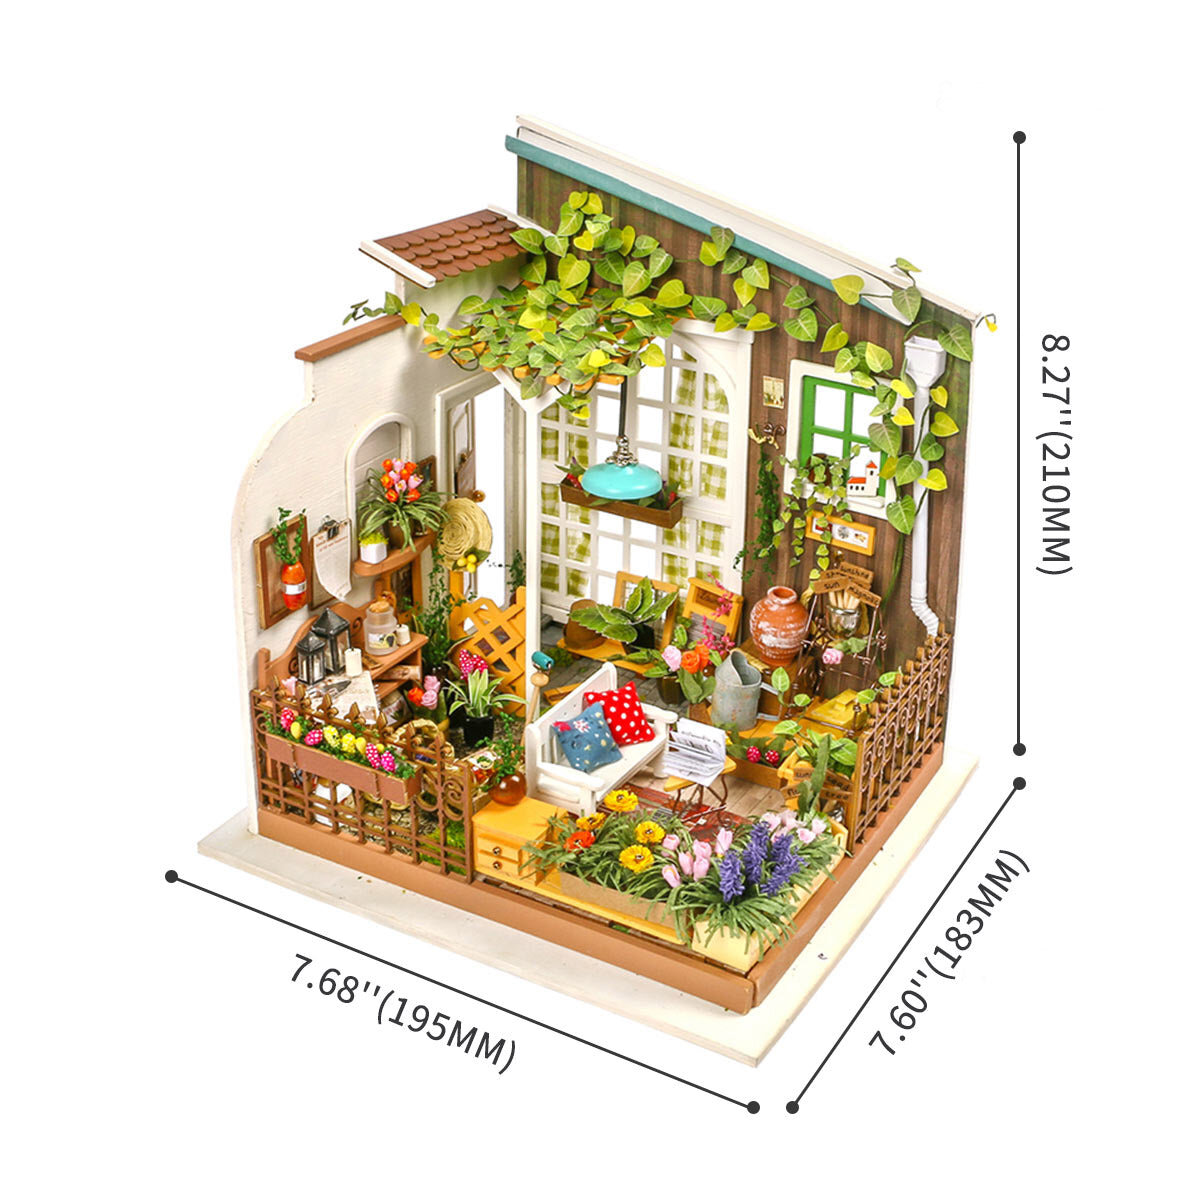 Maison miniature - Jardin de M. Miller Rolife DG108